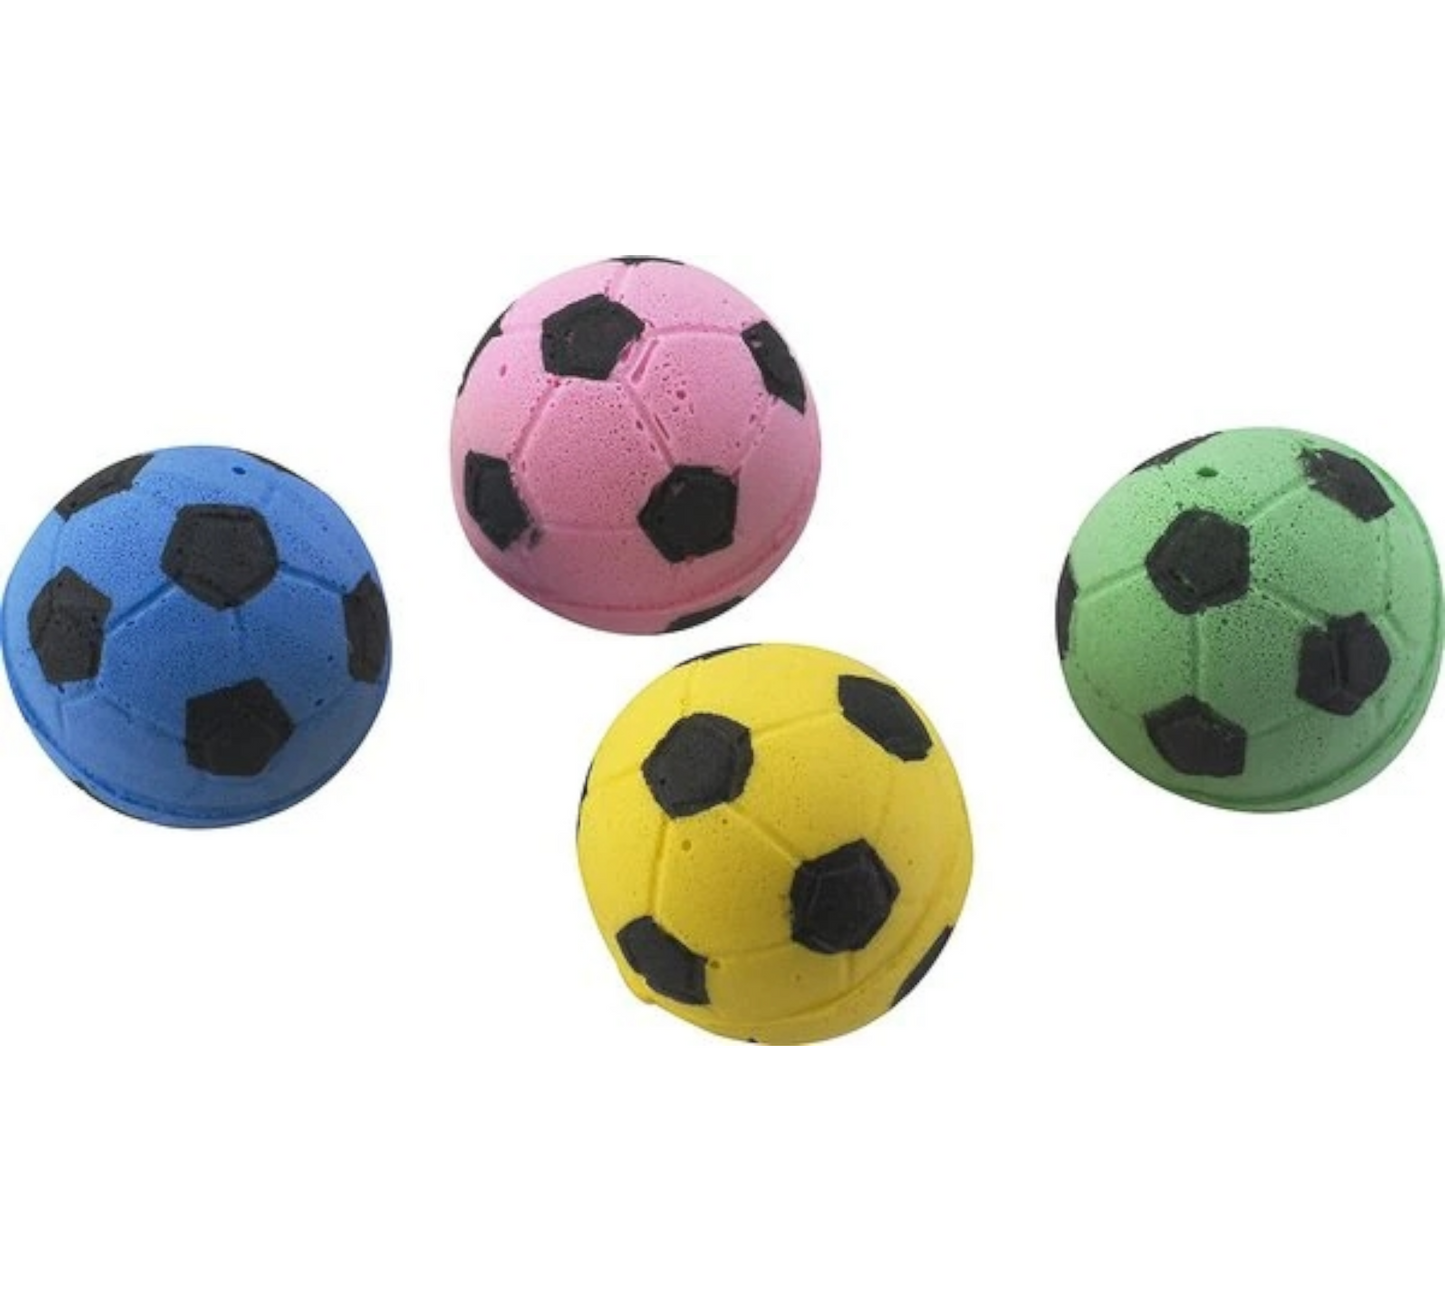 Canine's World Cat Toys Spot Pet Sponge Soccer Ball Cat Toy, 4-pack Spot